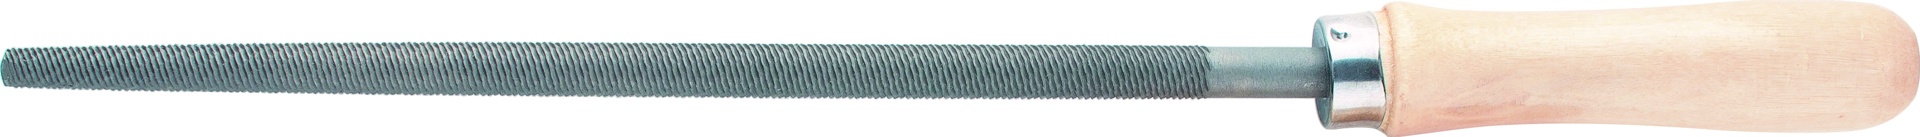 Turpija okrugla 250mm, sa drvenom drškom Sibrtex 16129 (SIB 16129)